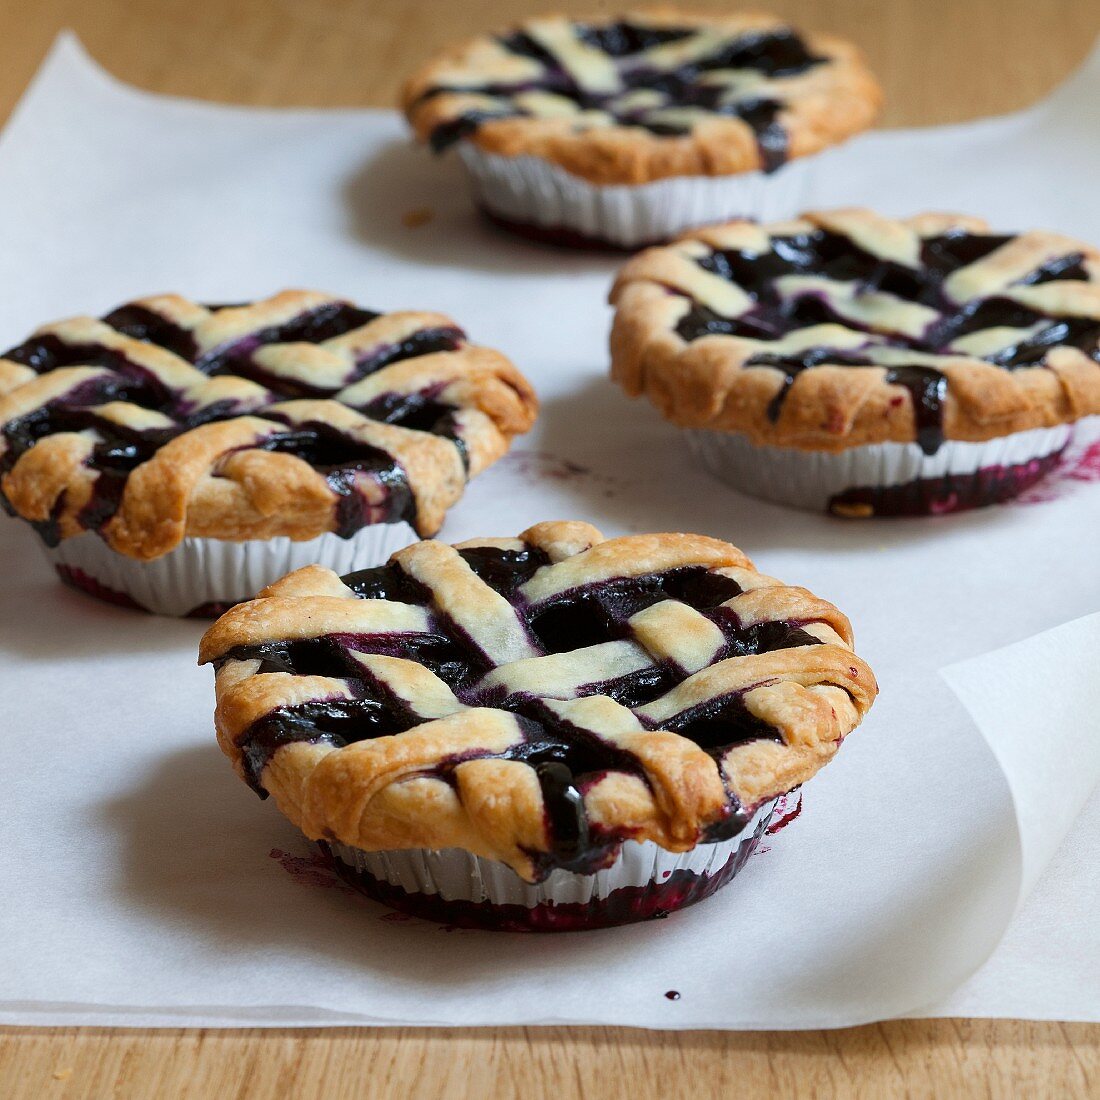 Blueberry pies with dough lattice